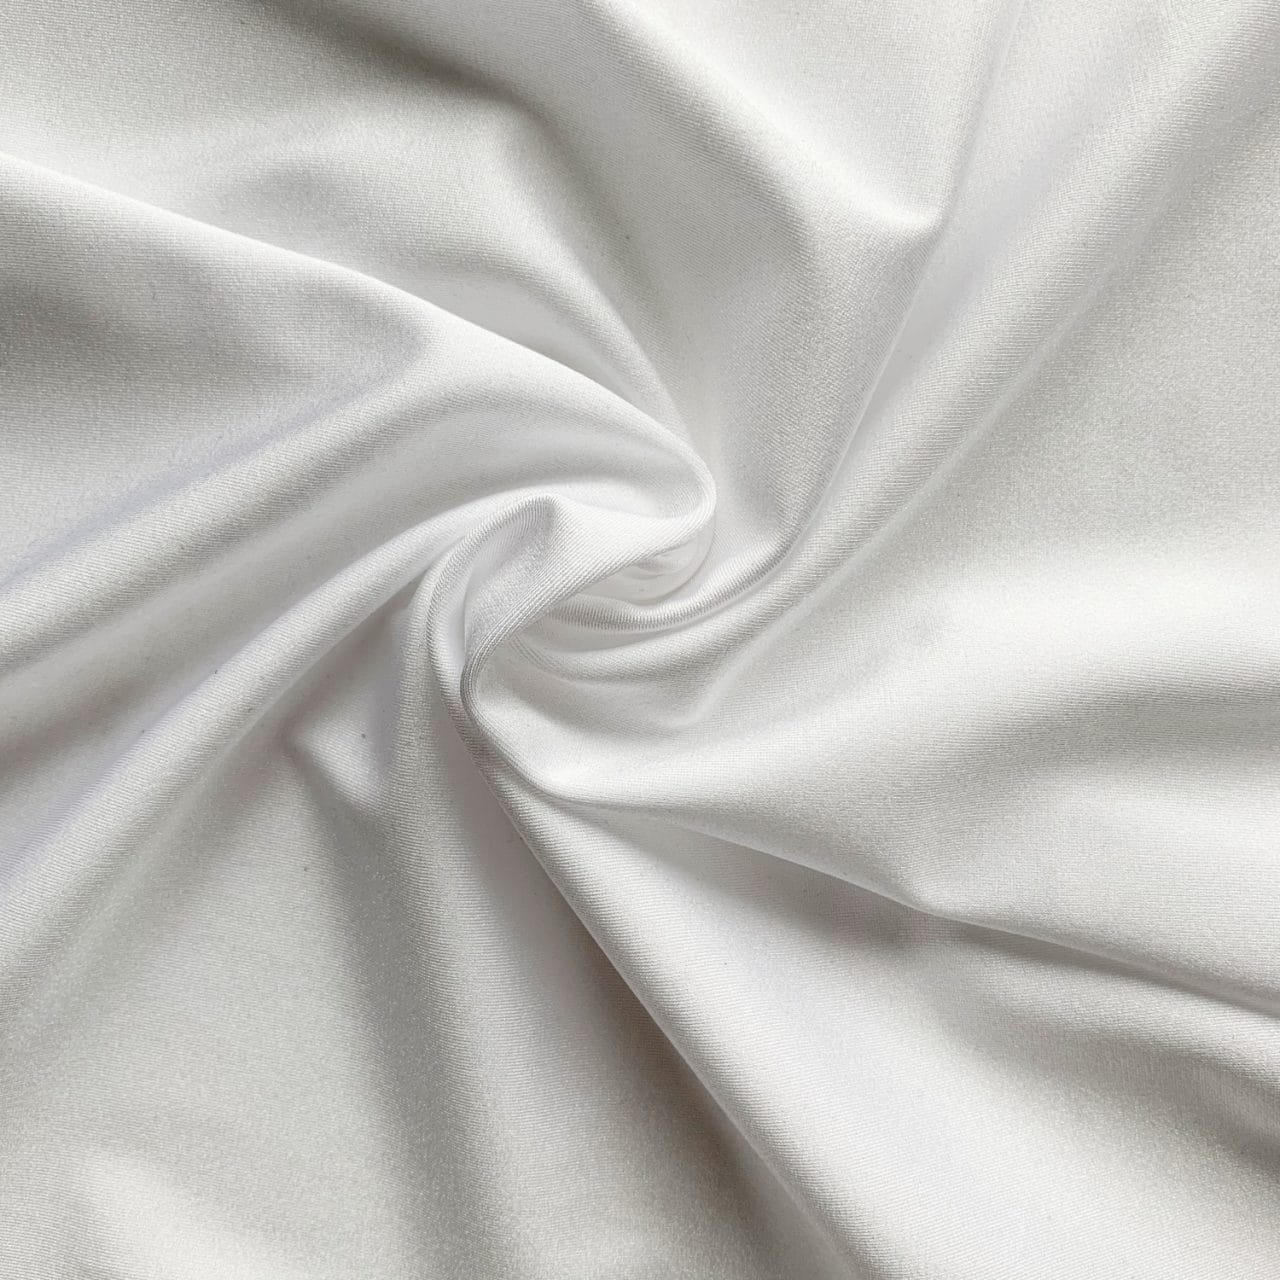 Carvico Sumatra Shiny Nylon Spandex- Bianco (White)